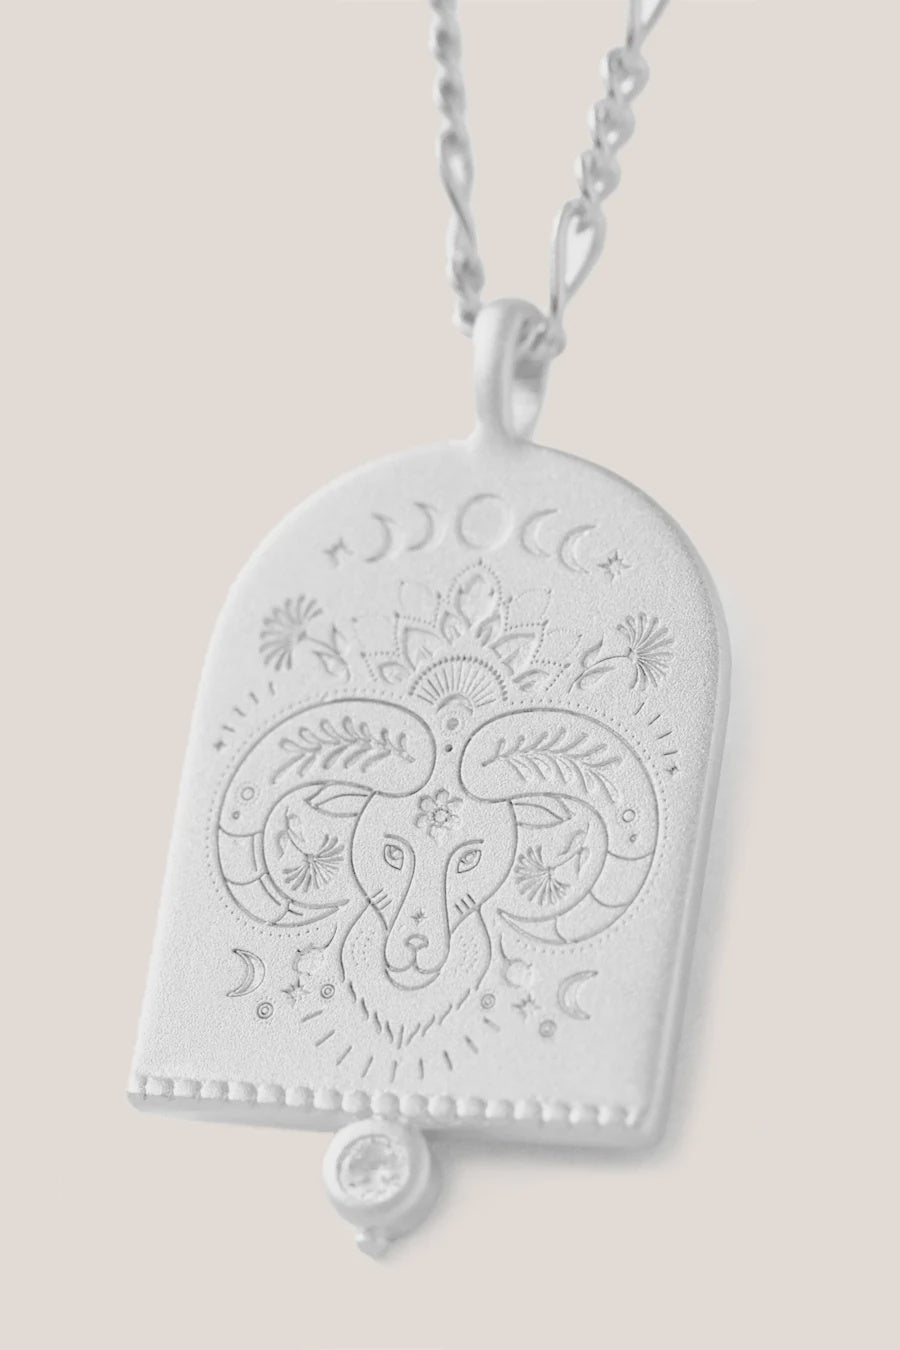 Aries Zodiac Necklace - Silver